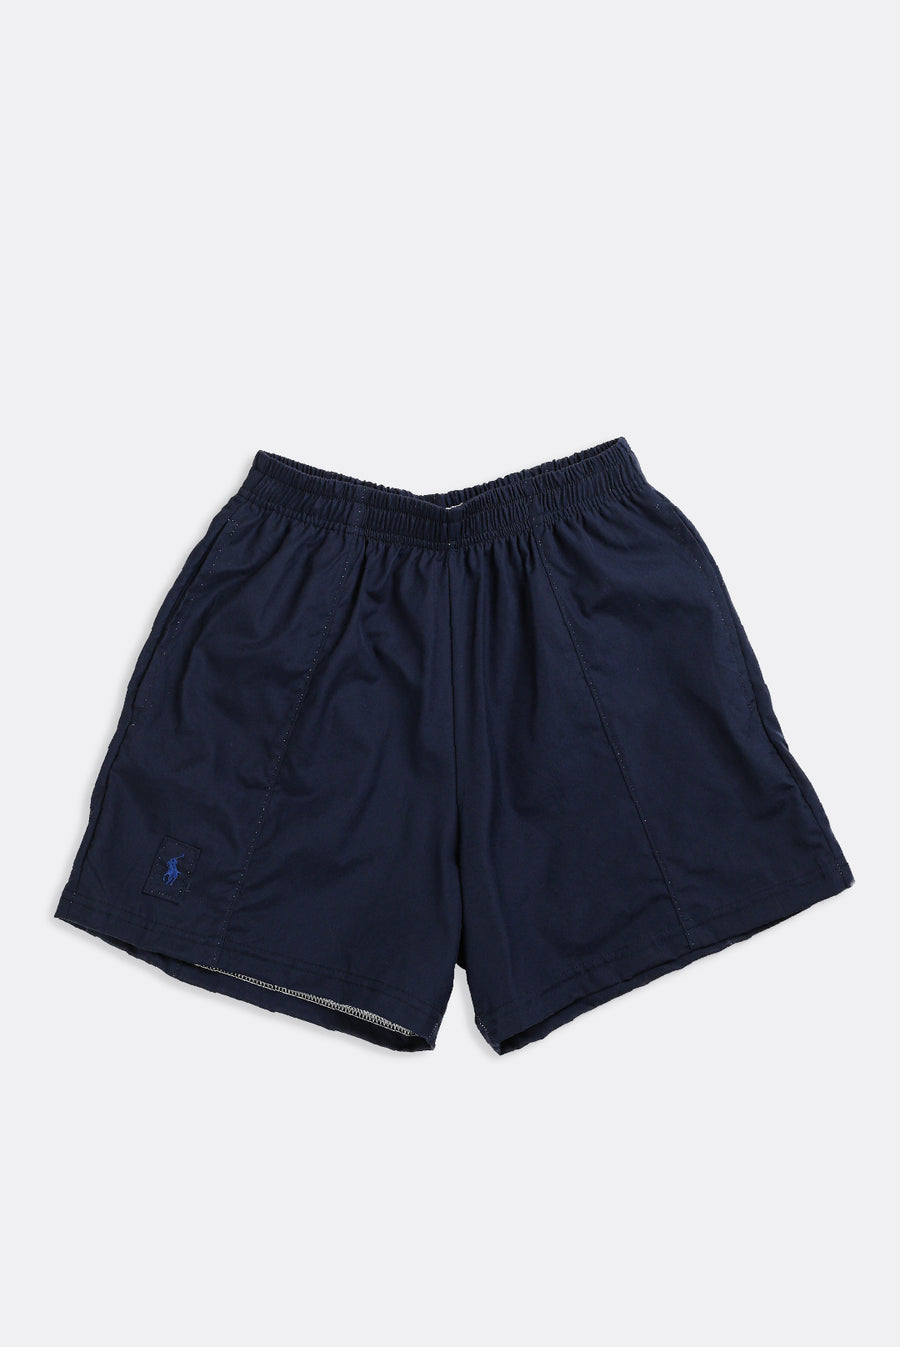 Unisex Rework Oxford Boxer Shorts - XS